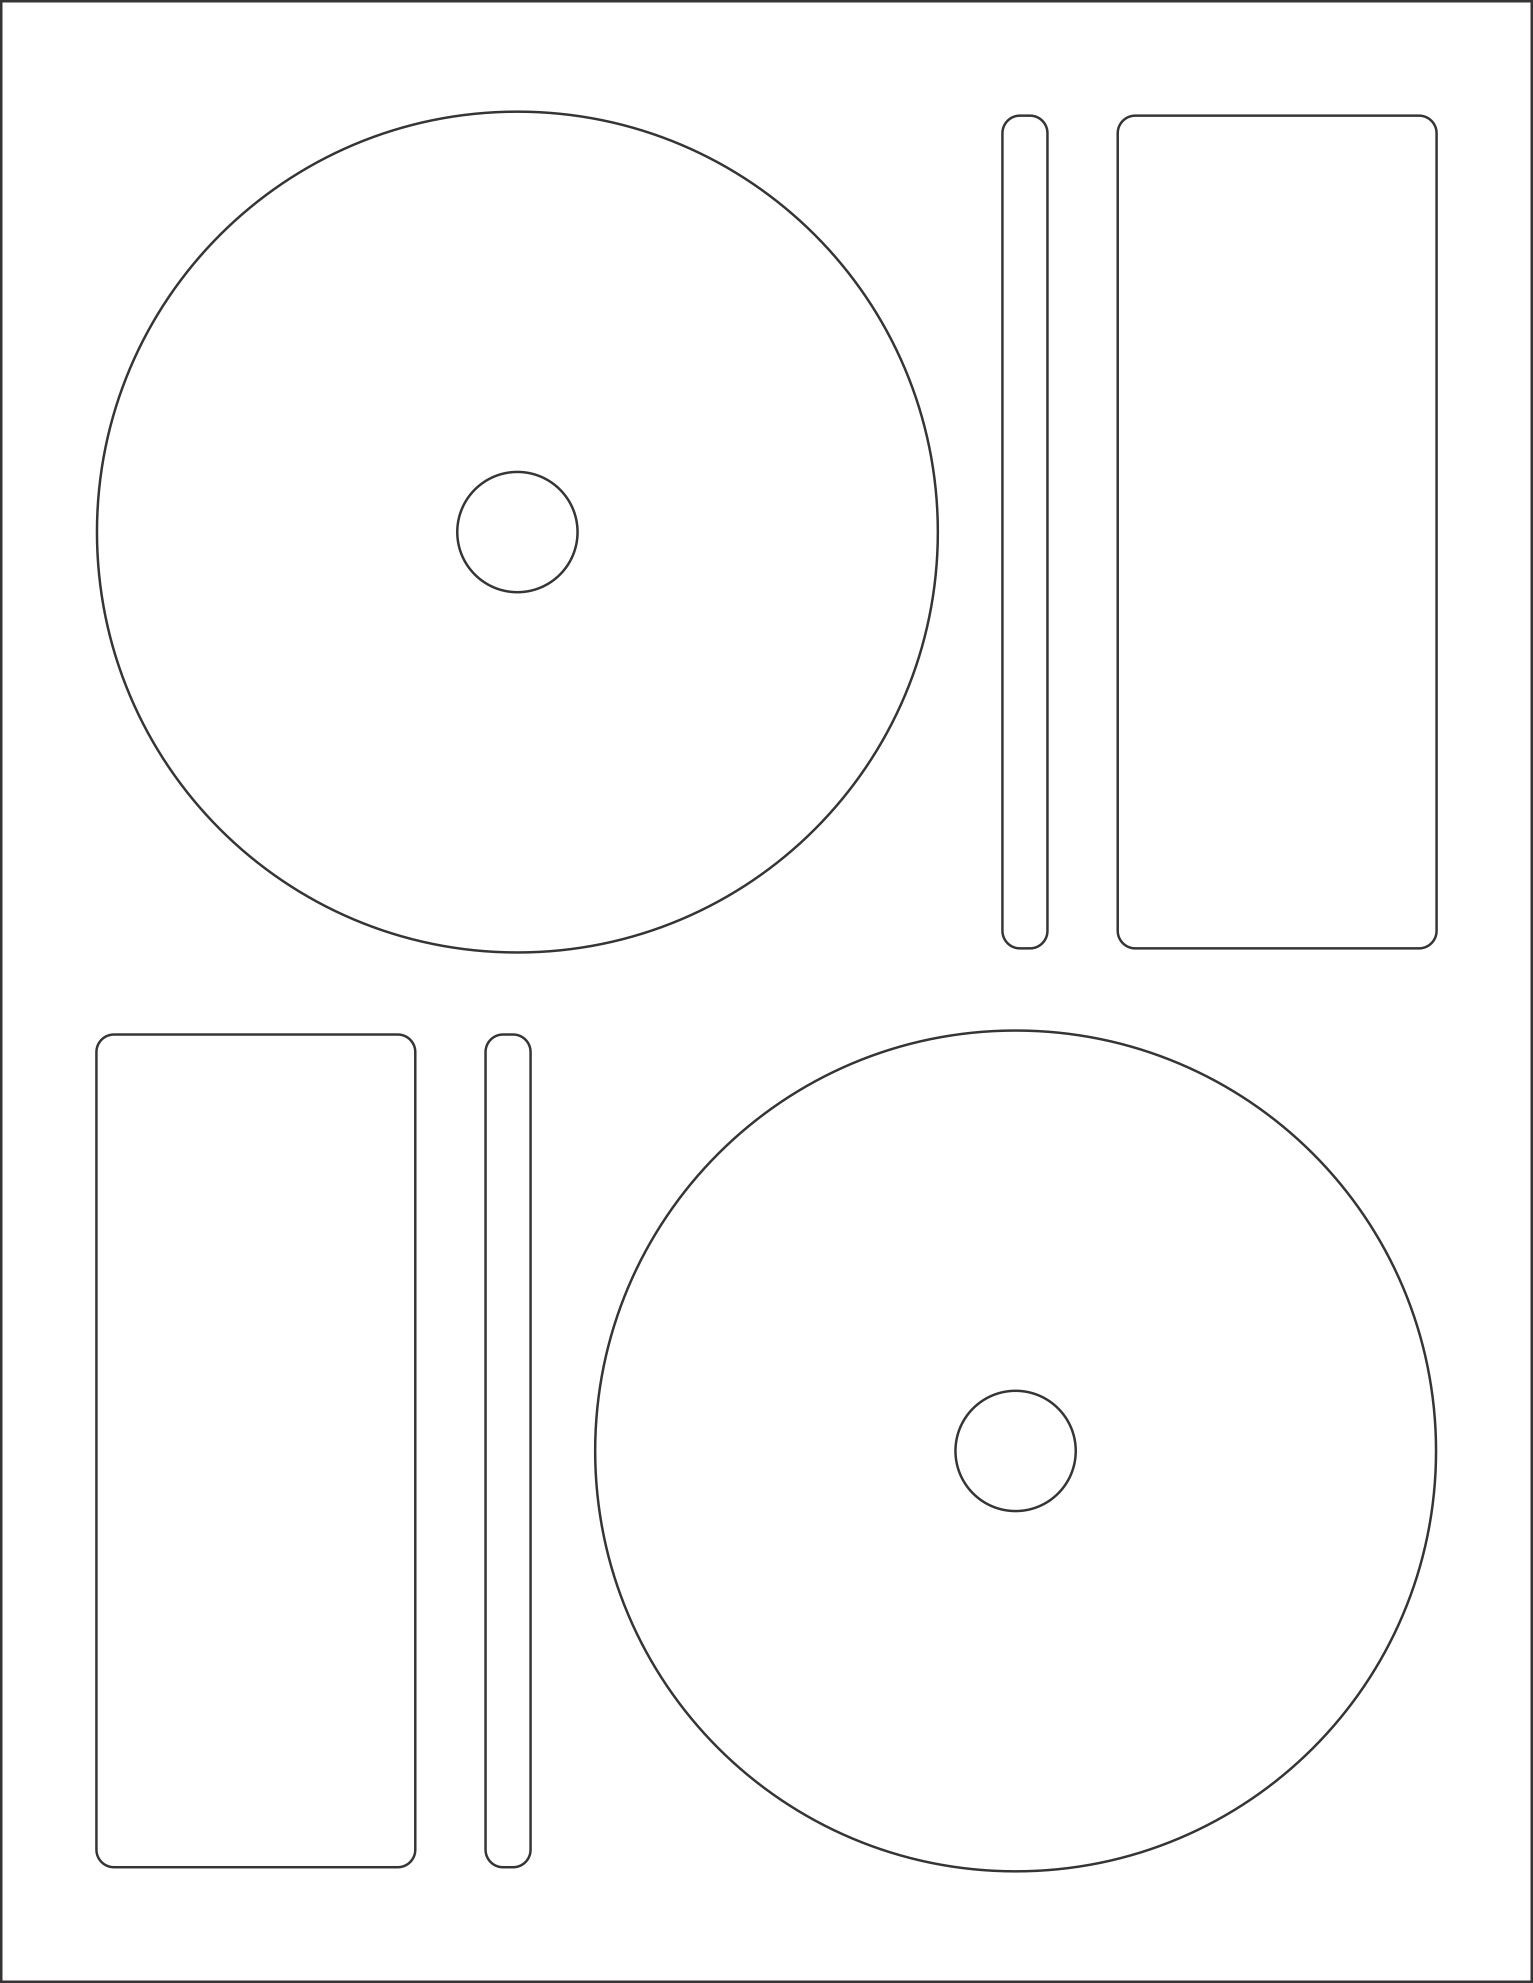 35-memorex-dvd-label-template-labels-database-2020